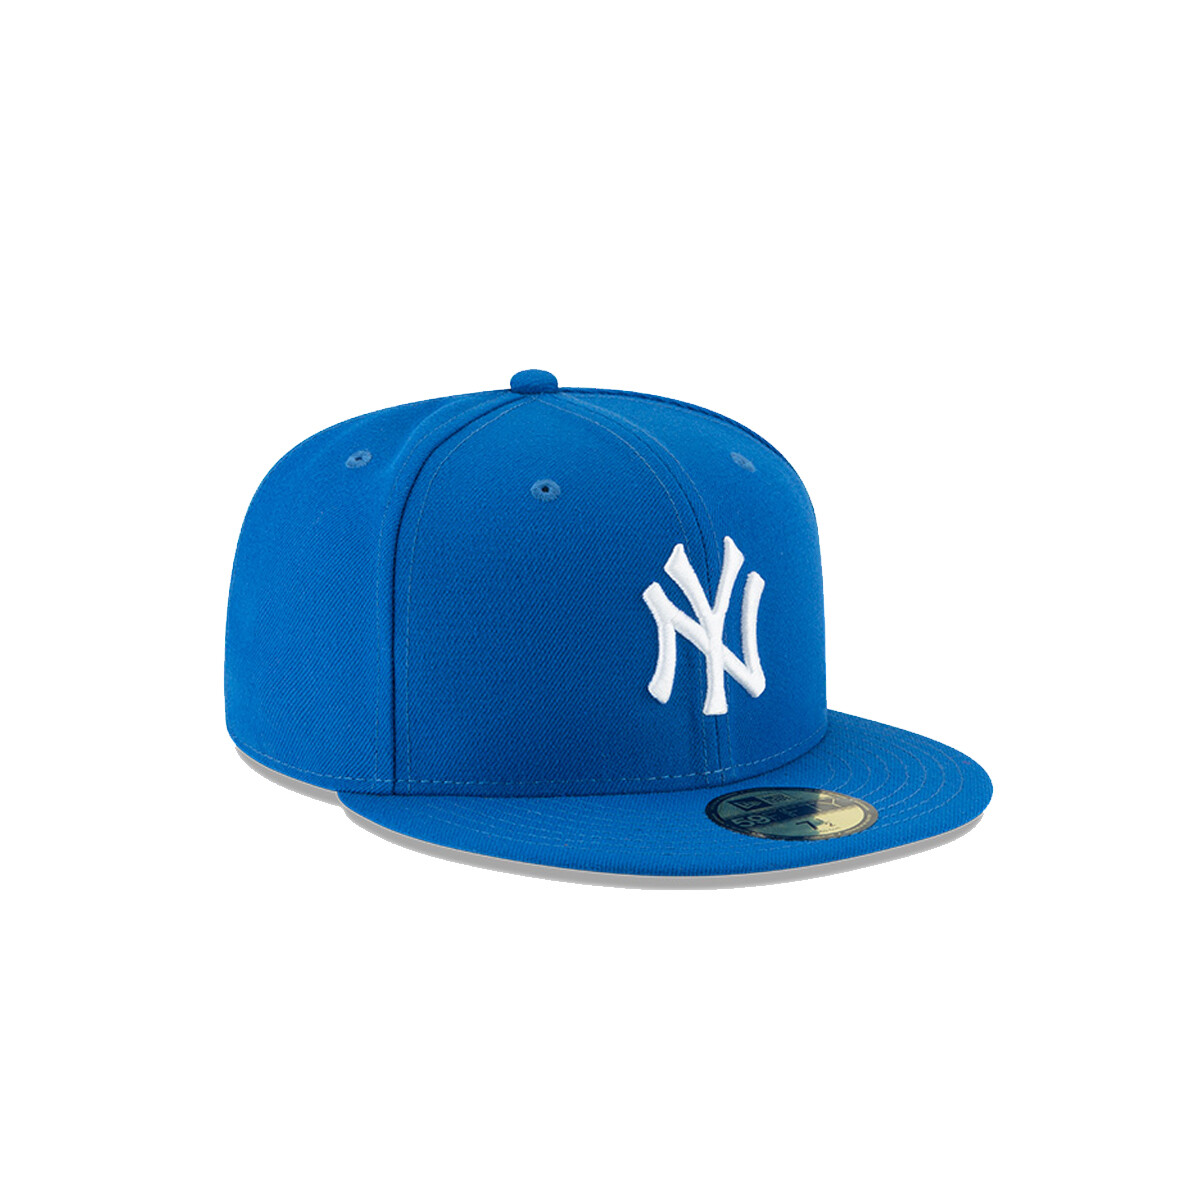 Gorro New Era - New York Yankees MLB 59Fifty - 11591129 - ROYAL BLUE 